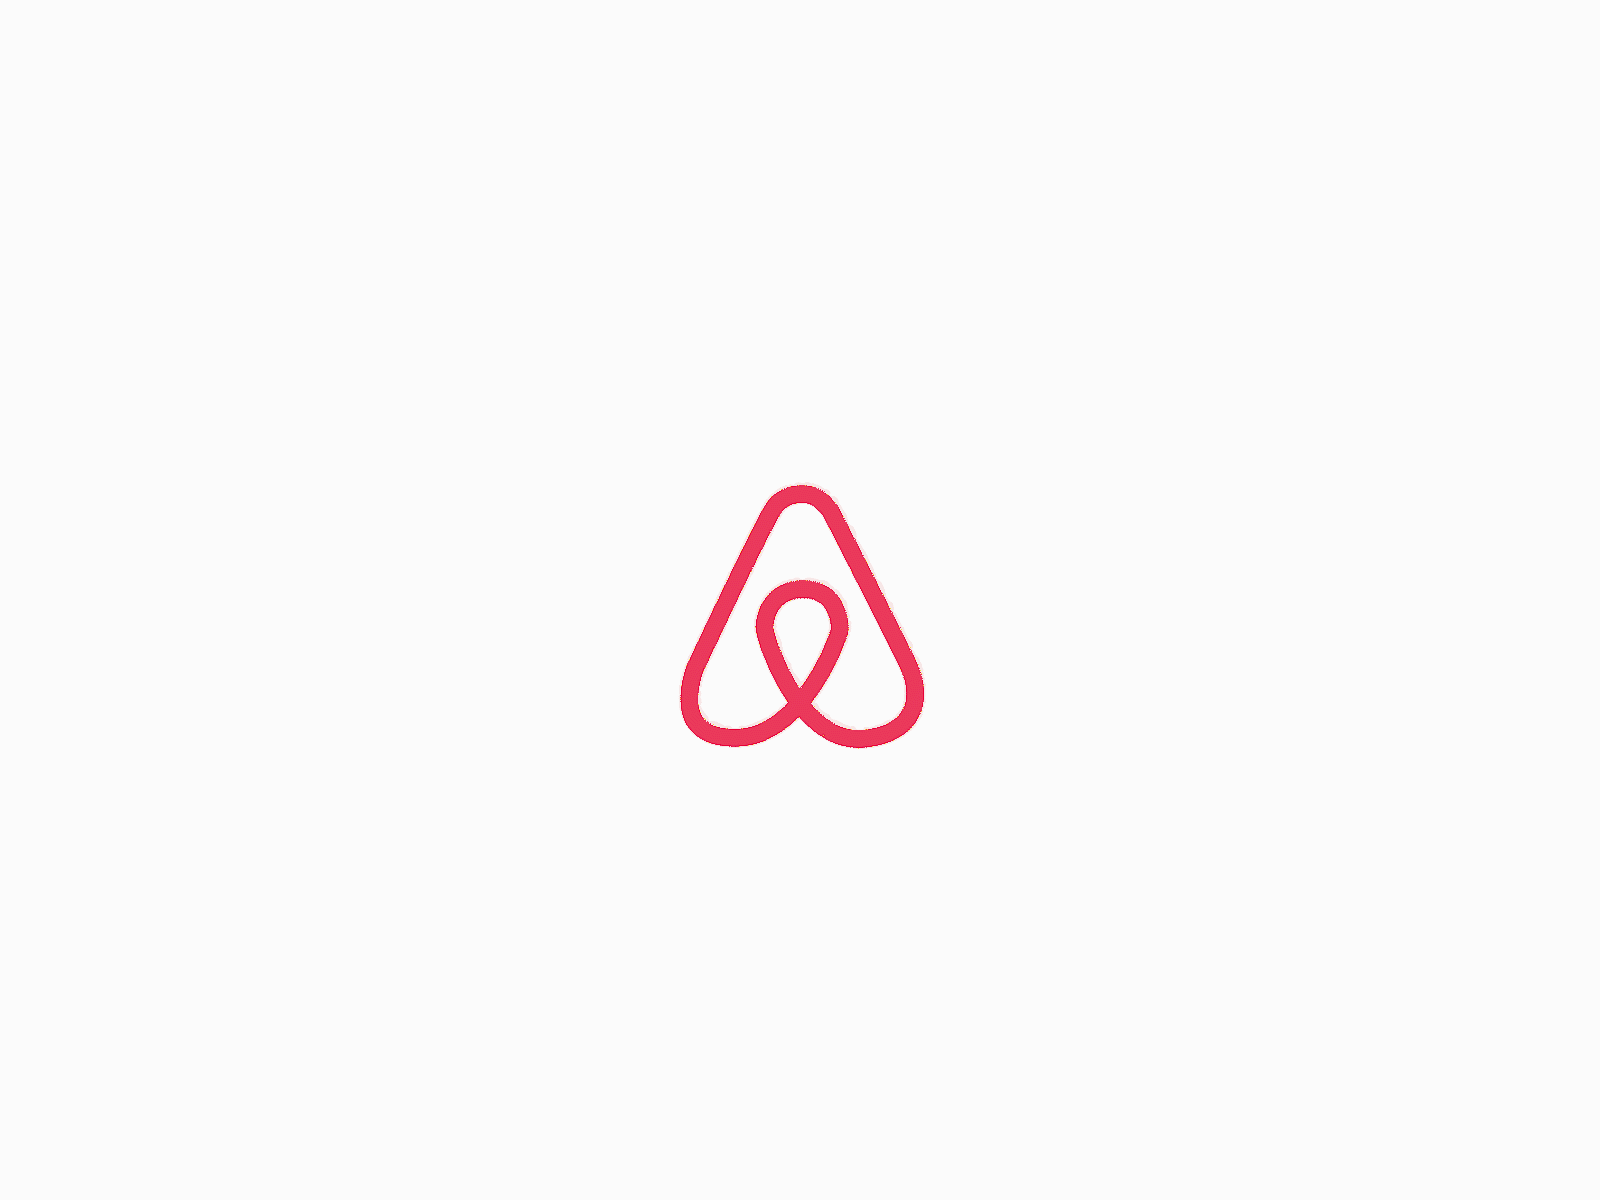 Airbnb logo animation